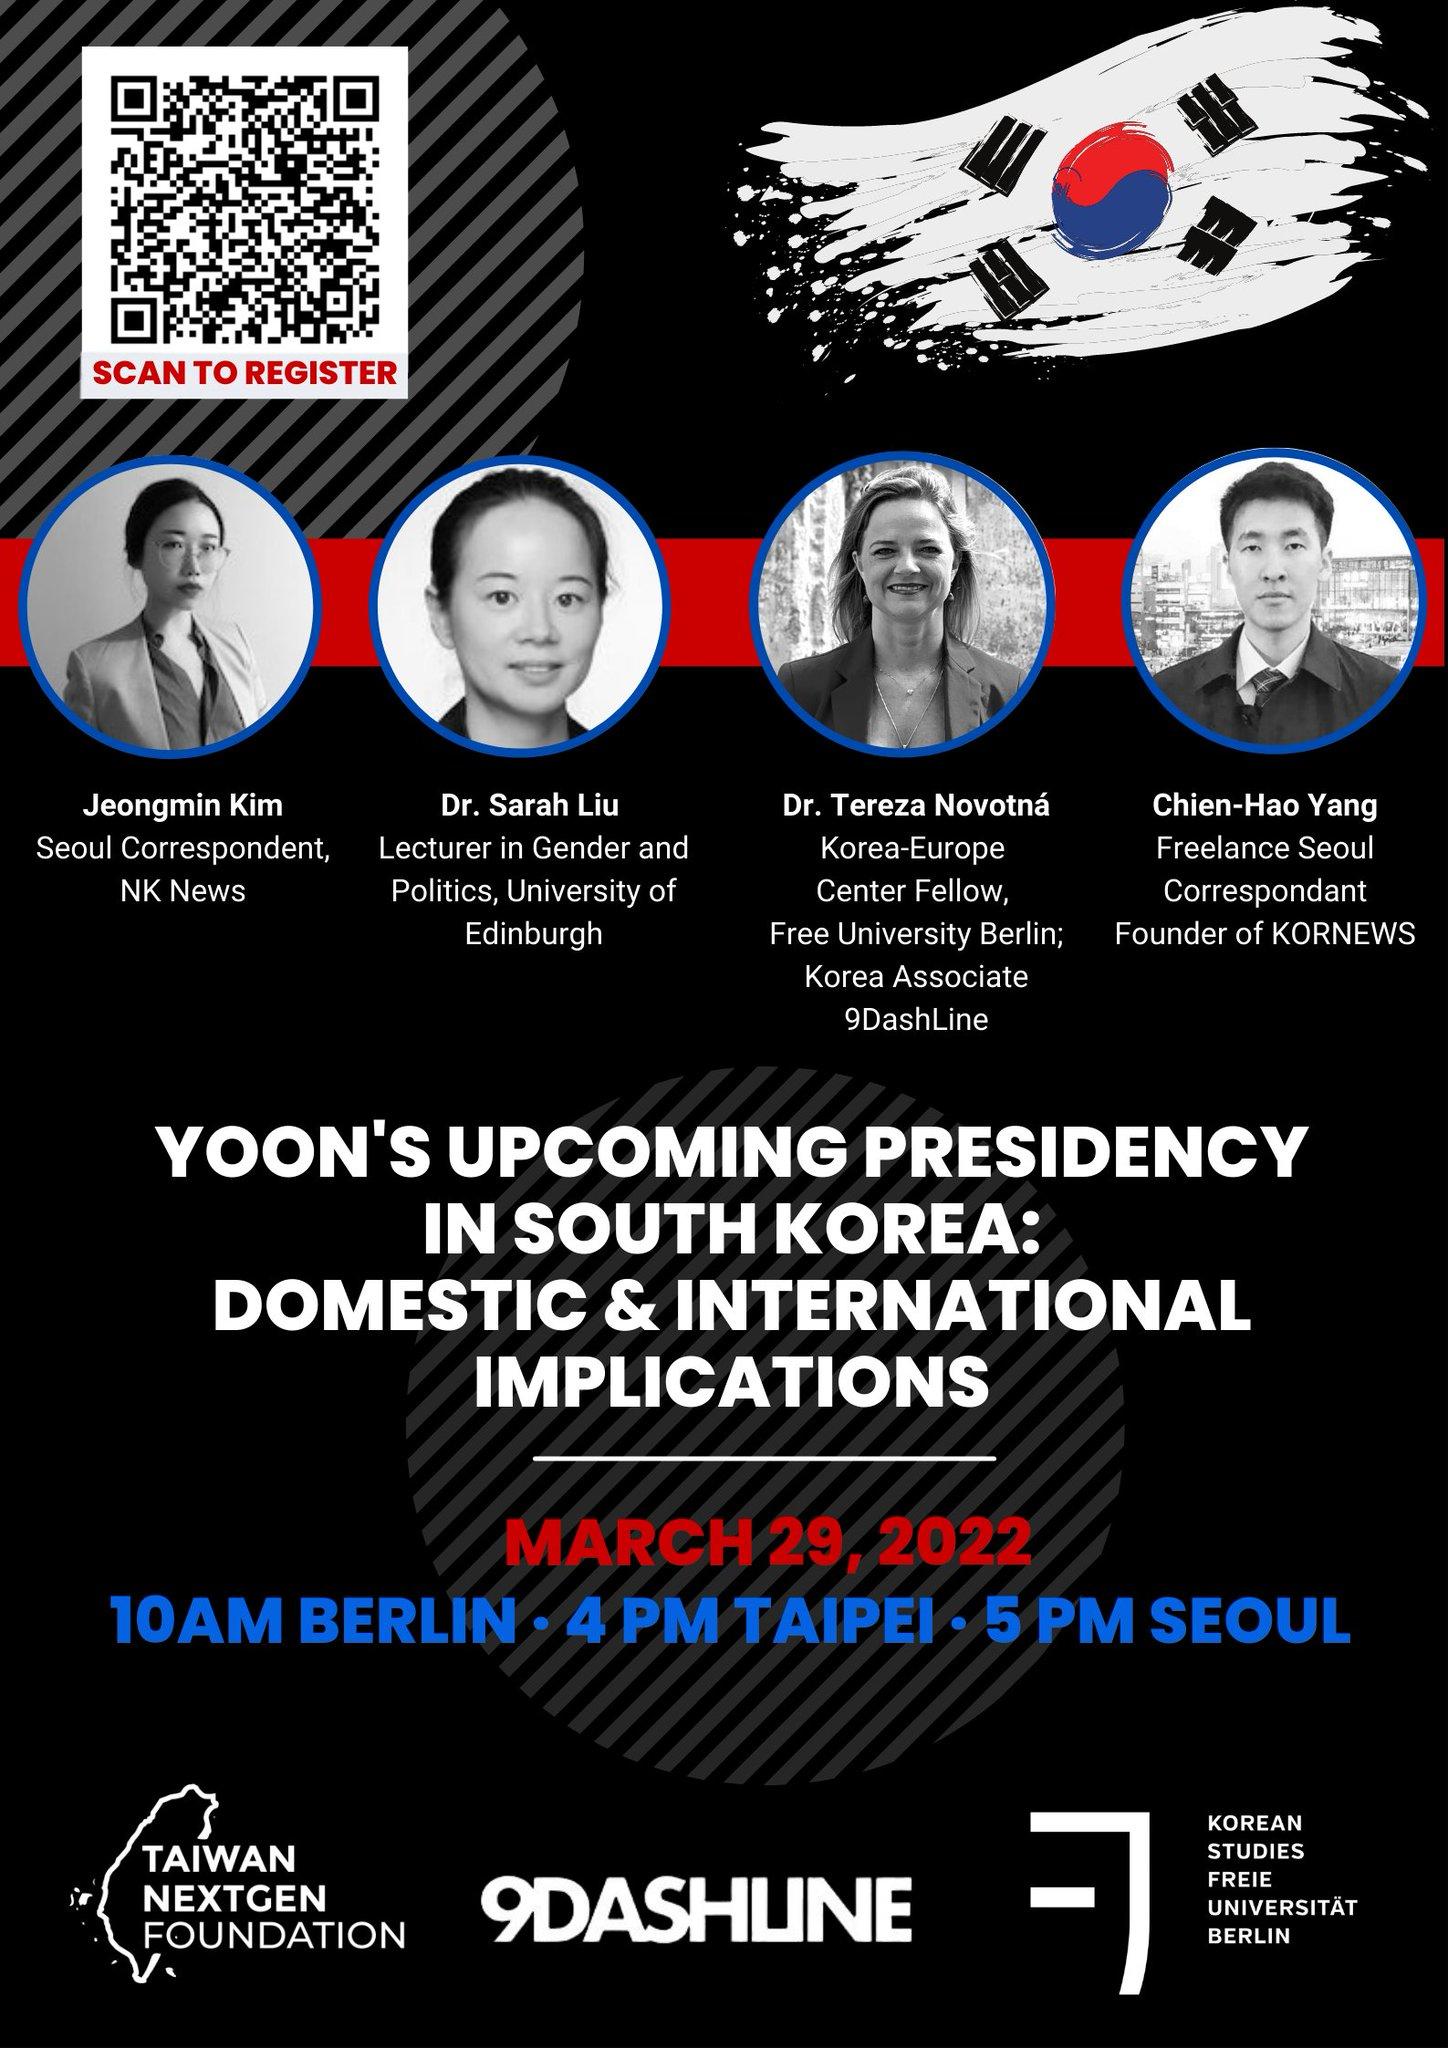 Yoon’s Upcoming Presidency in South Korea: Domestic & International Implications